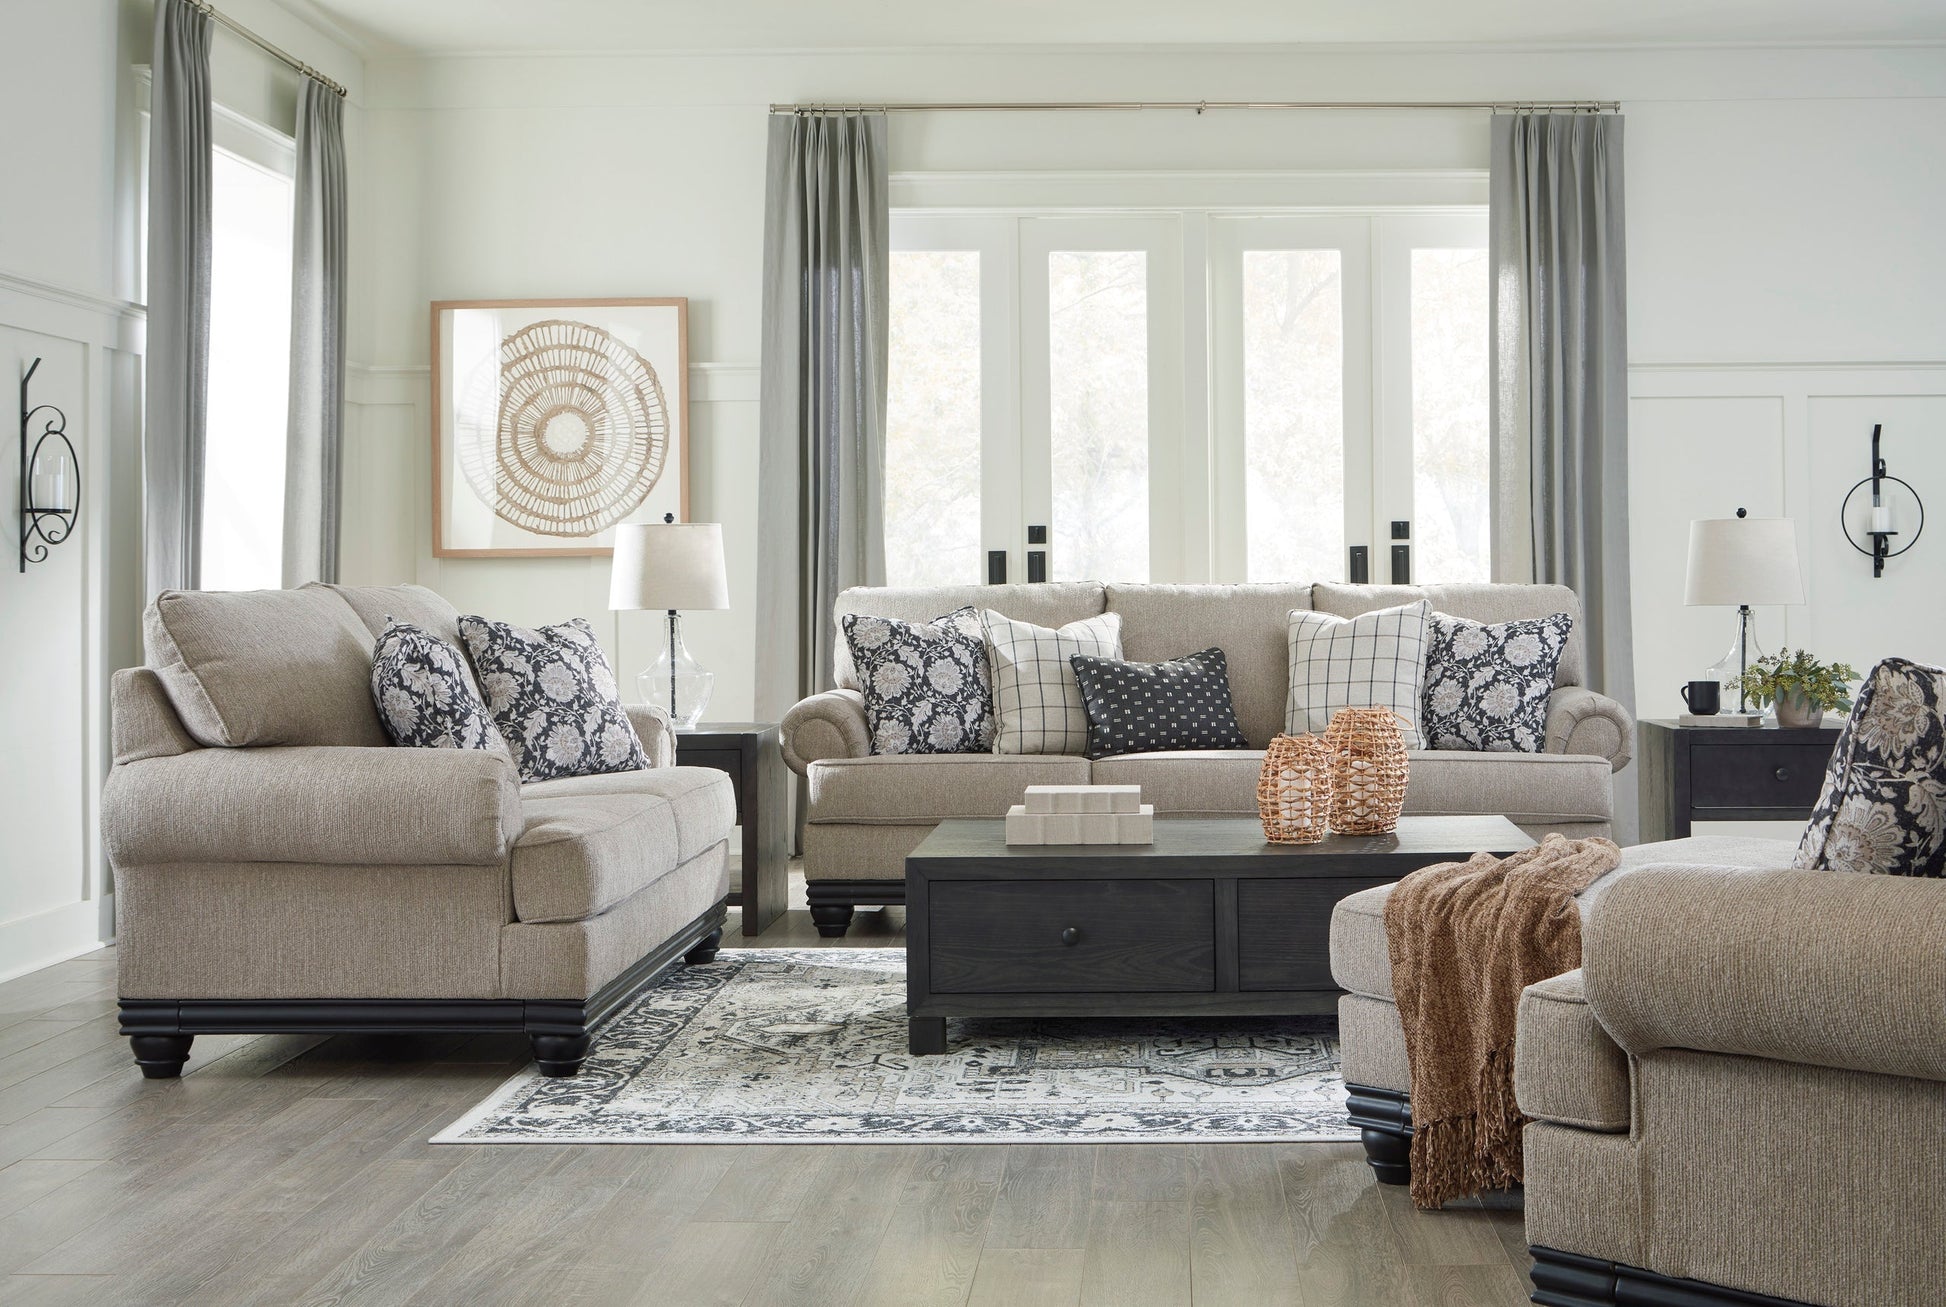 Ashley Modern Contemporary Solid Wood Fabric Upholstered Oversized Sofa & Loveseat Set